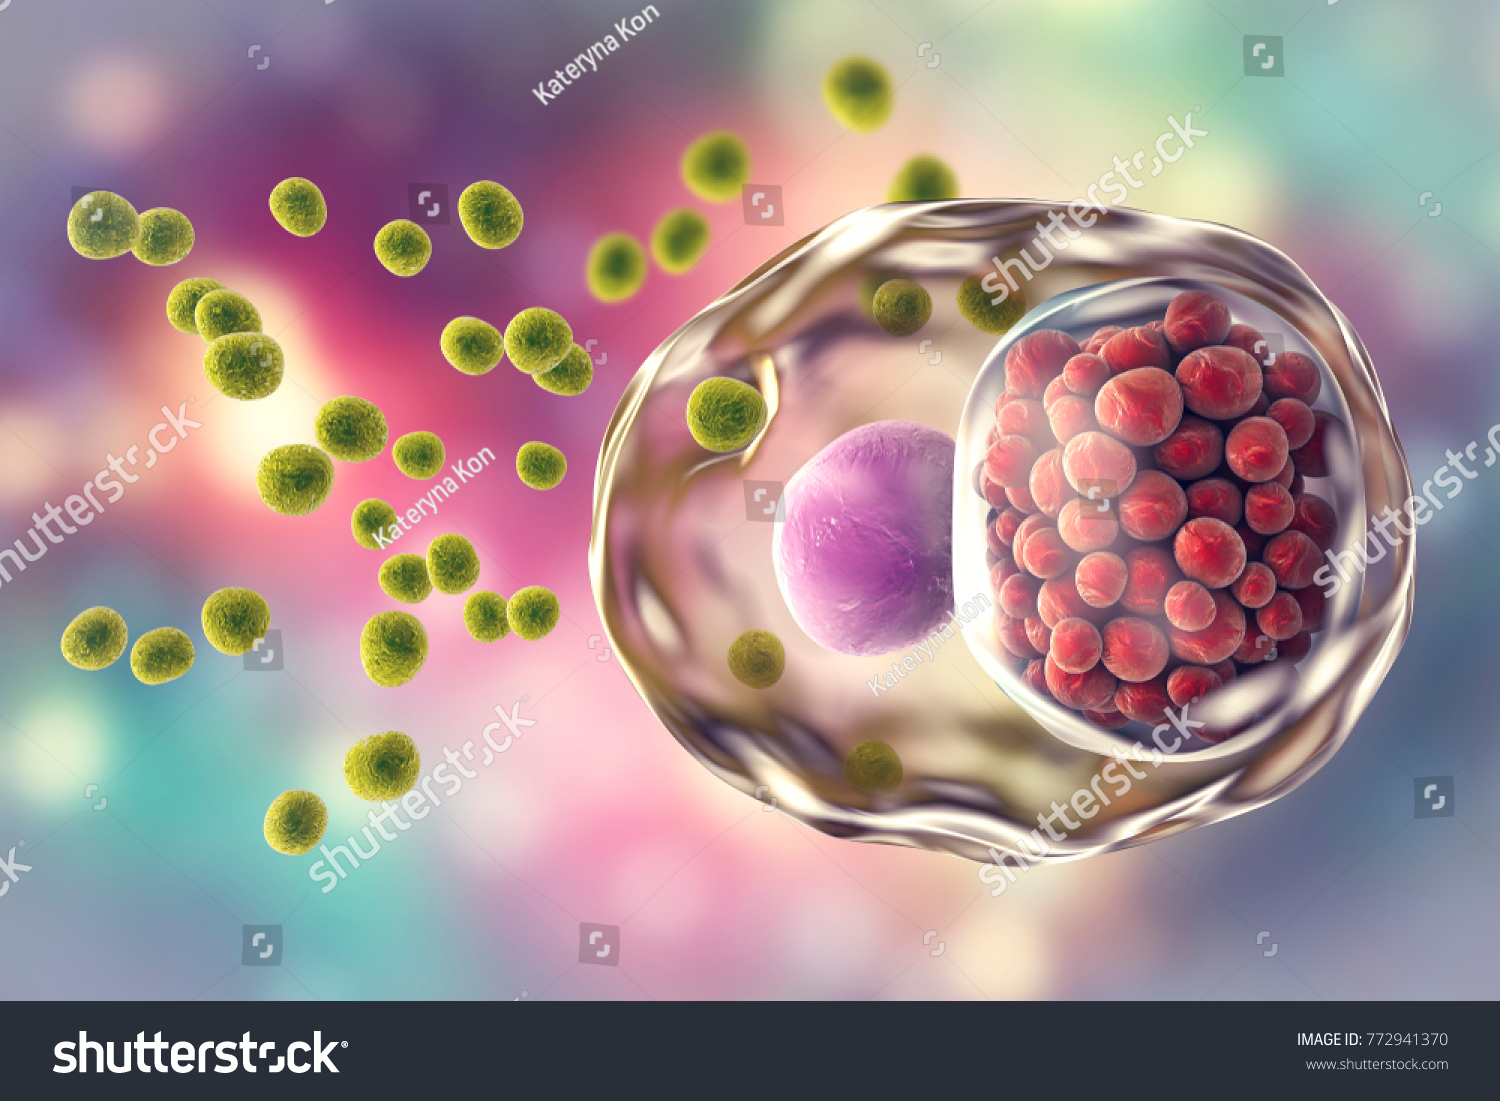 Chlamydia Trachomatis Bacteria 3d Illustration Showing Stock Illustration 772941370 Shutterstock 5831